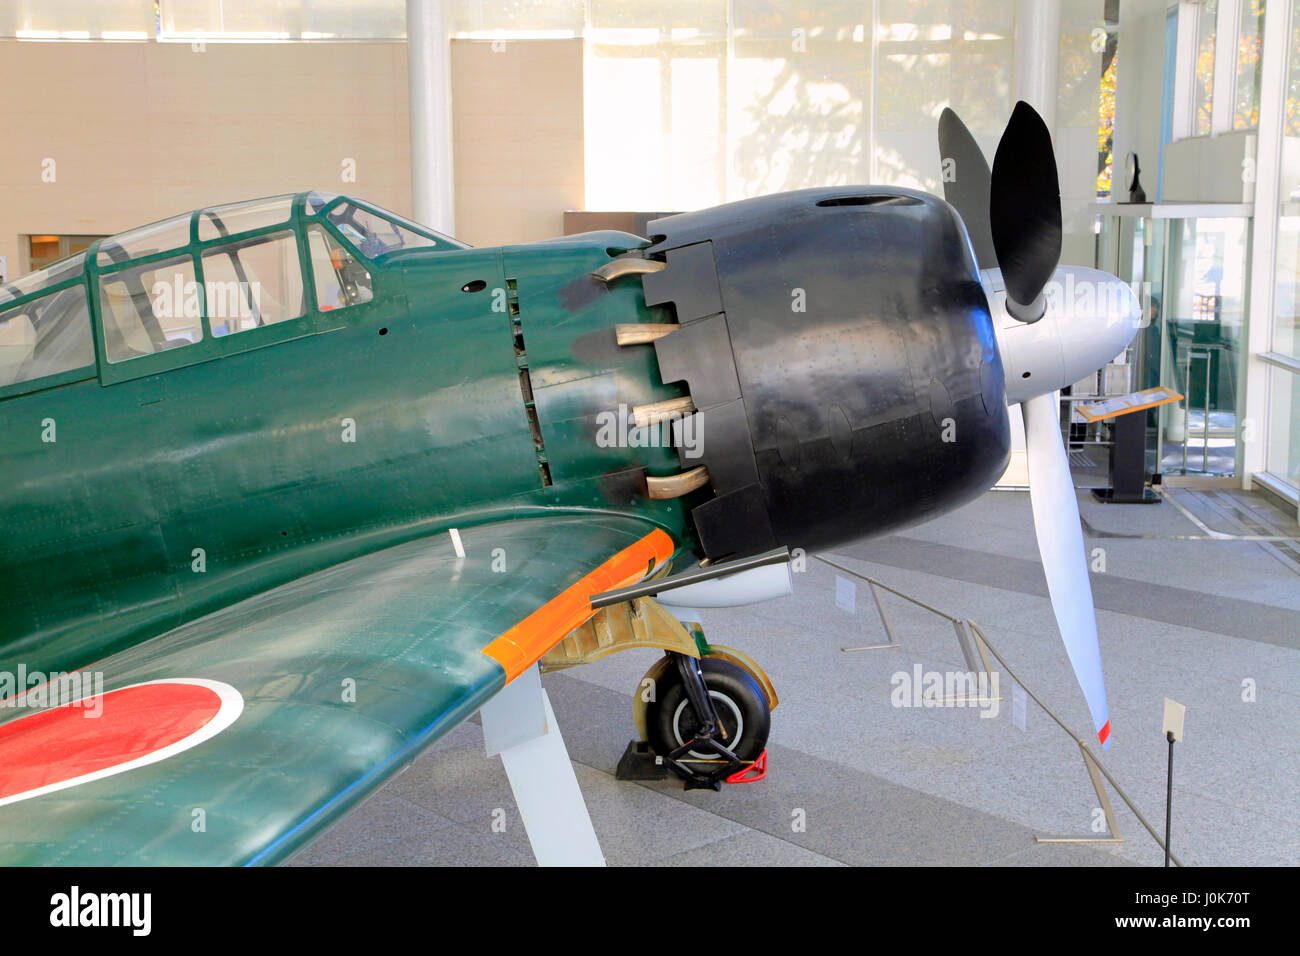 Mitsubishi A6M Zero at Yushukan Museum Tokyo Japan Stock Photo